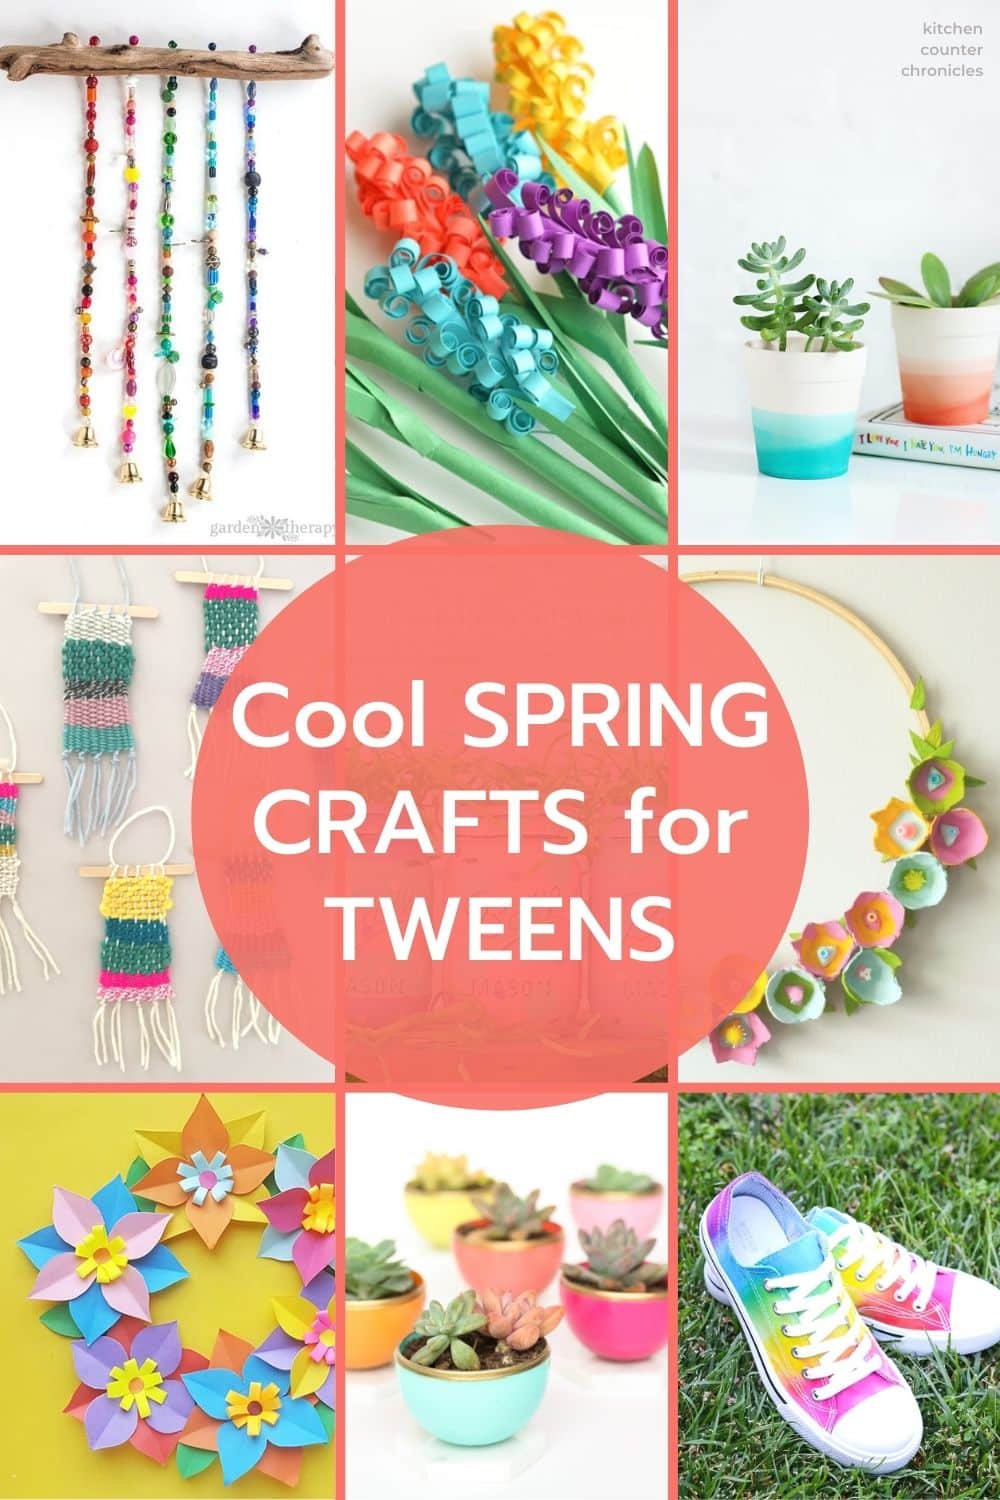 Cool Spring Crafts for Tweens to Make